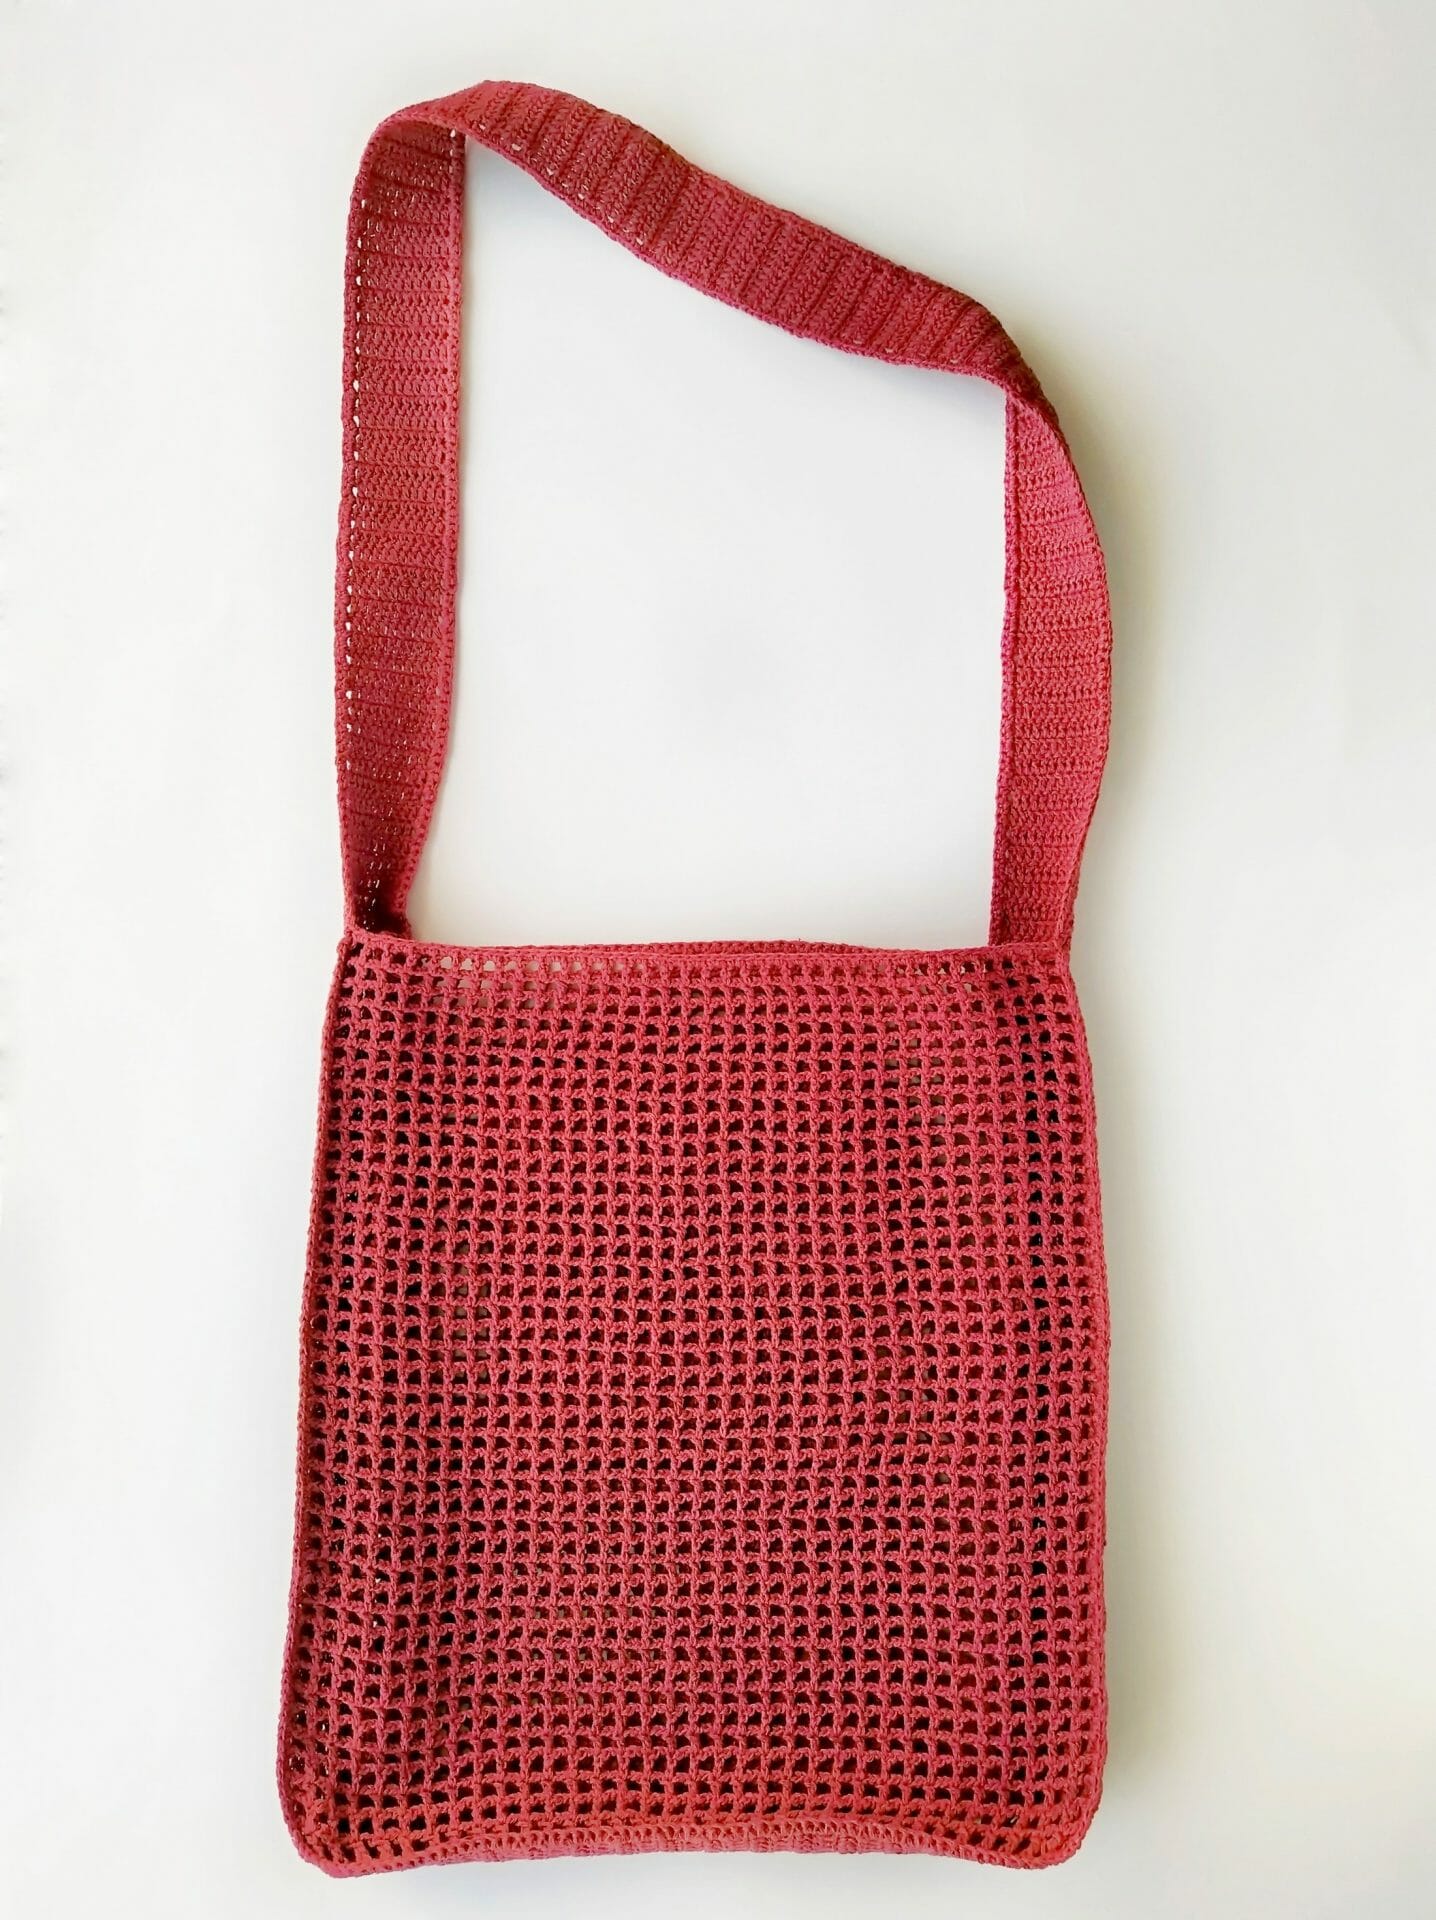 Crochet shoulder bag pattern Crochet tote bag easy